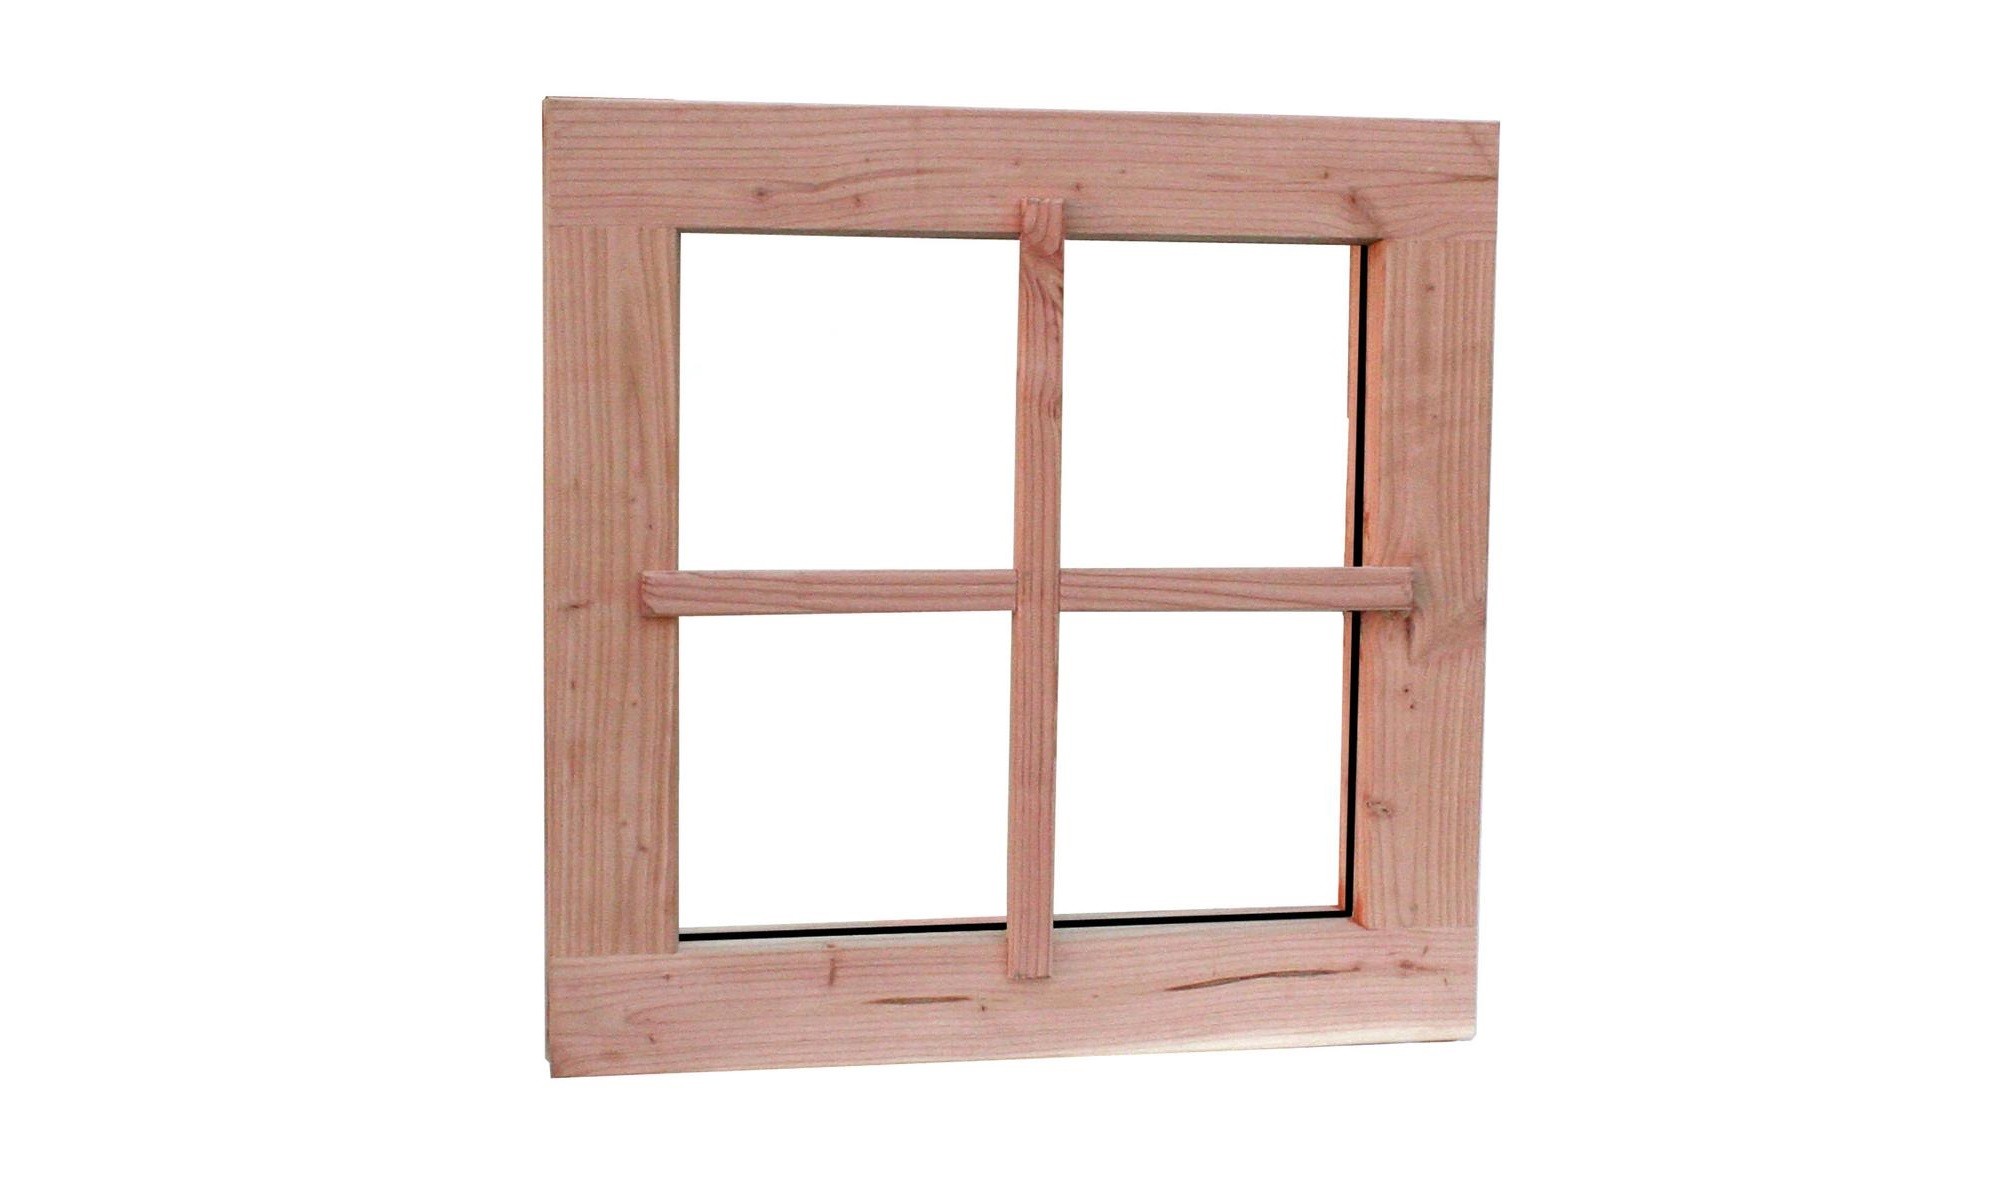 Douglas vast raam met dubbelglas 66,4x66,4cm